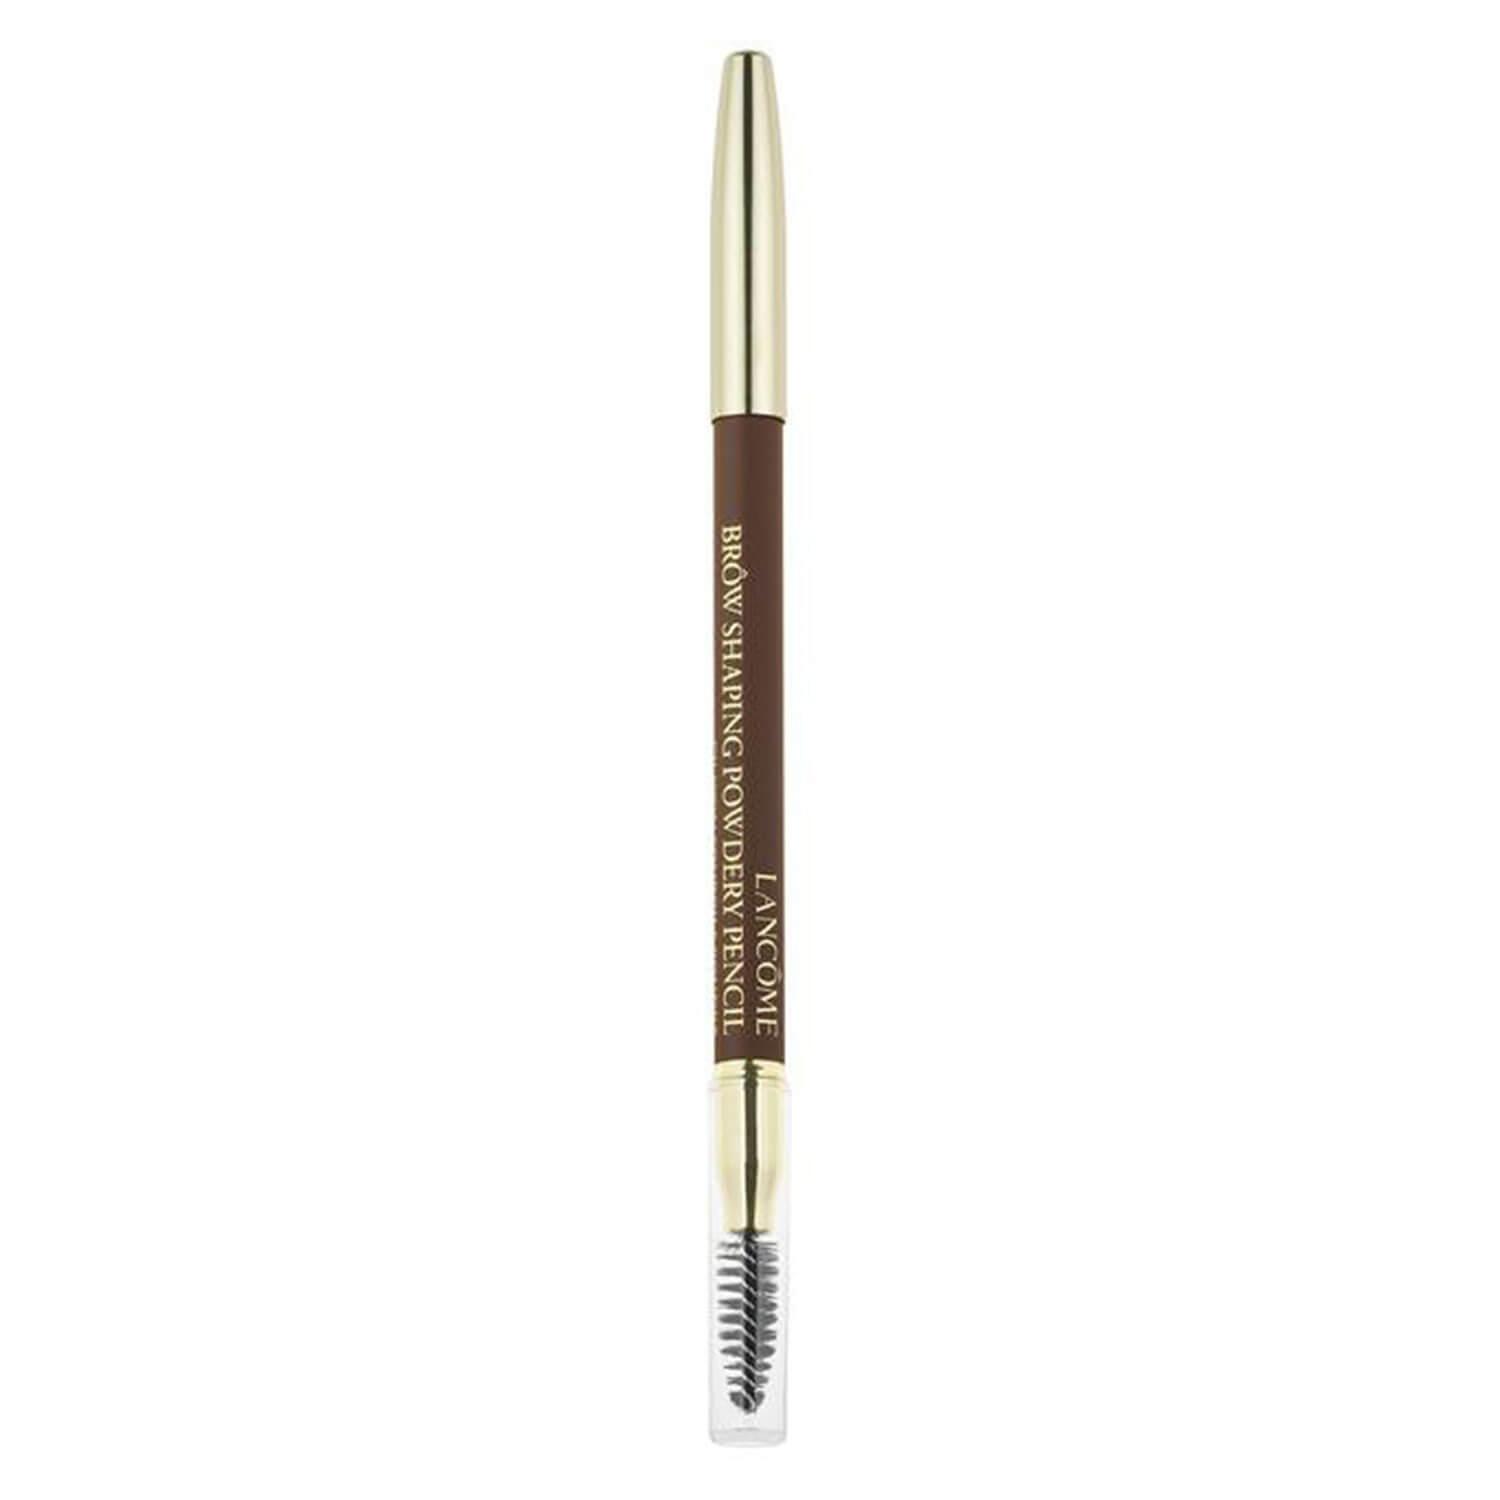 Lancôme Brows - Brow Shaping Powdery Pencil 05